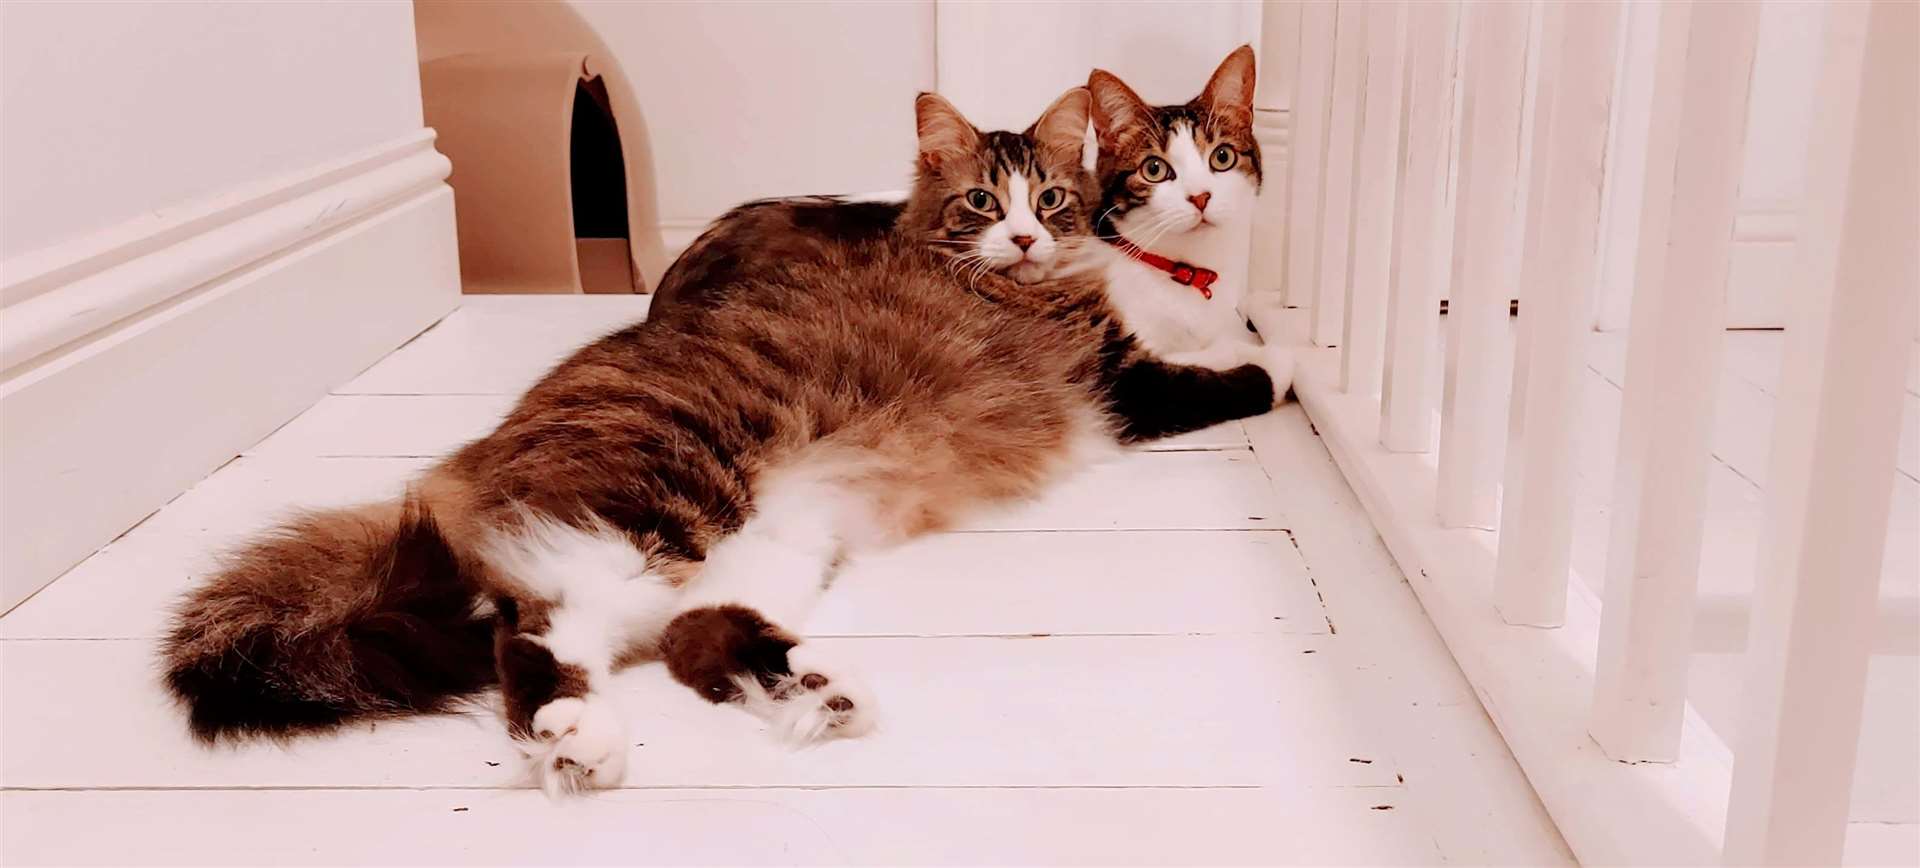 Lloyd's cats, Mogwai and Arthur